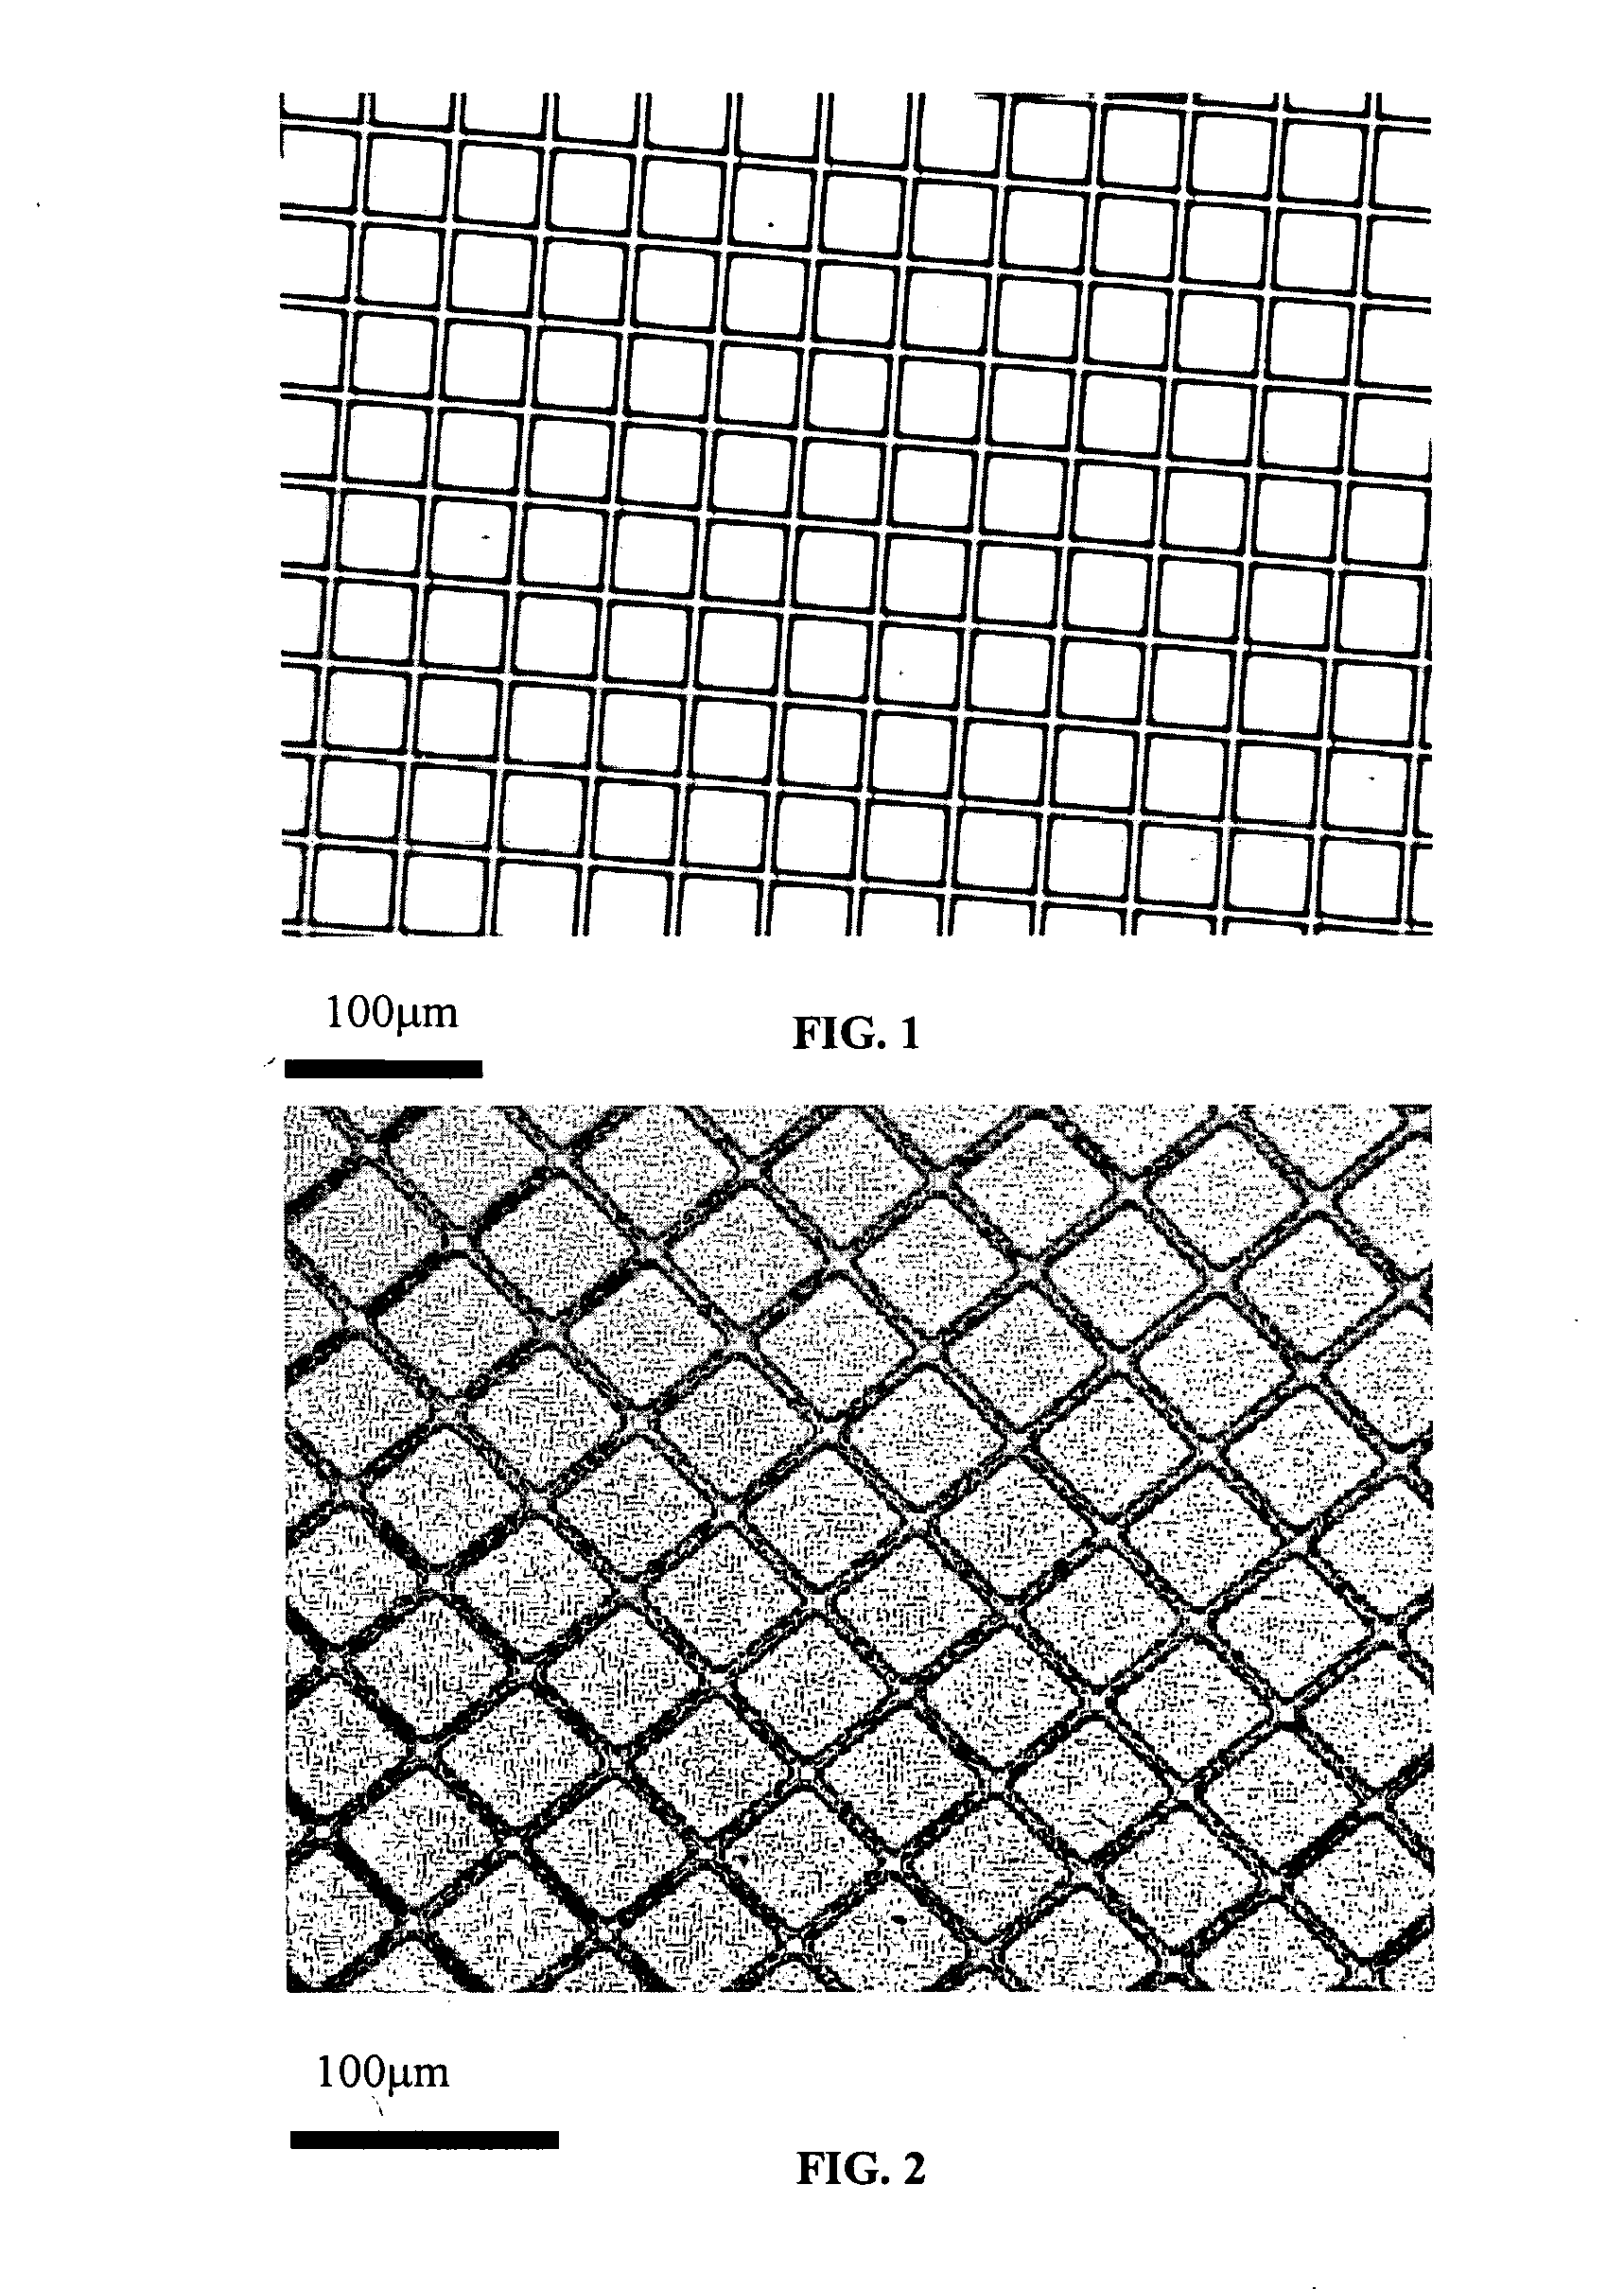 Multi-layer polymer scaffolds